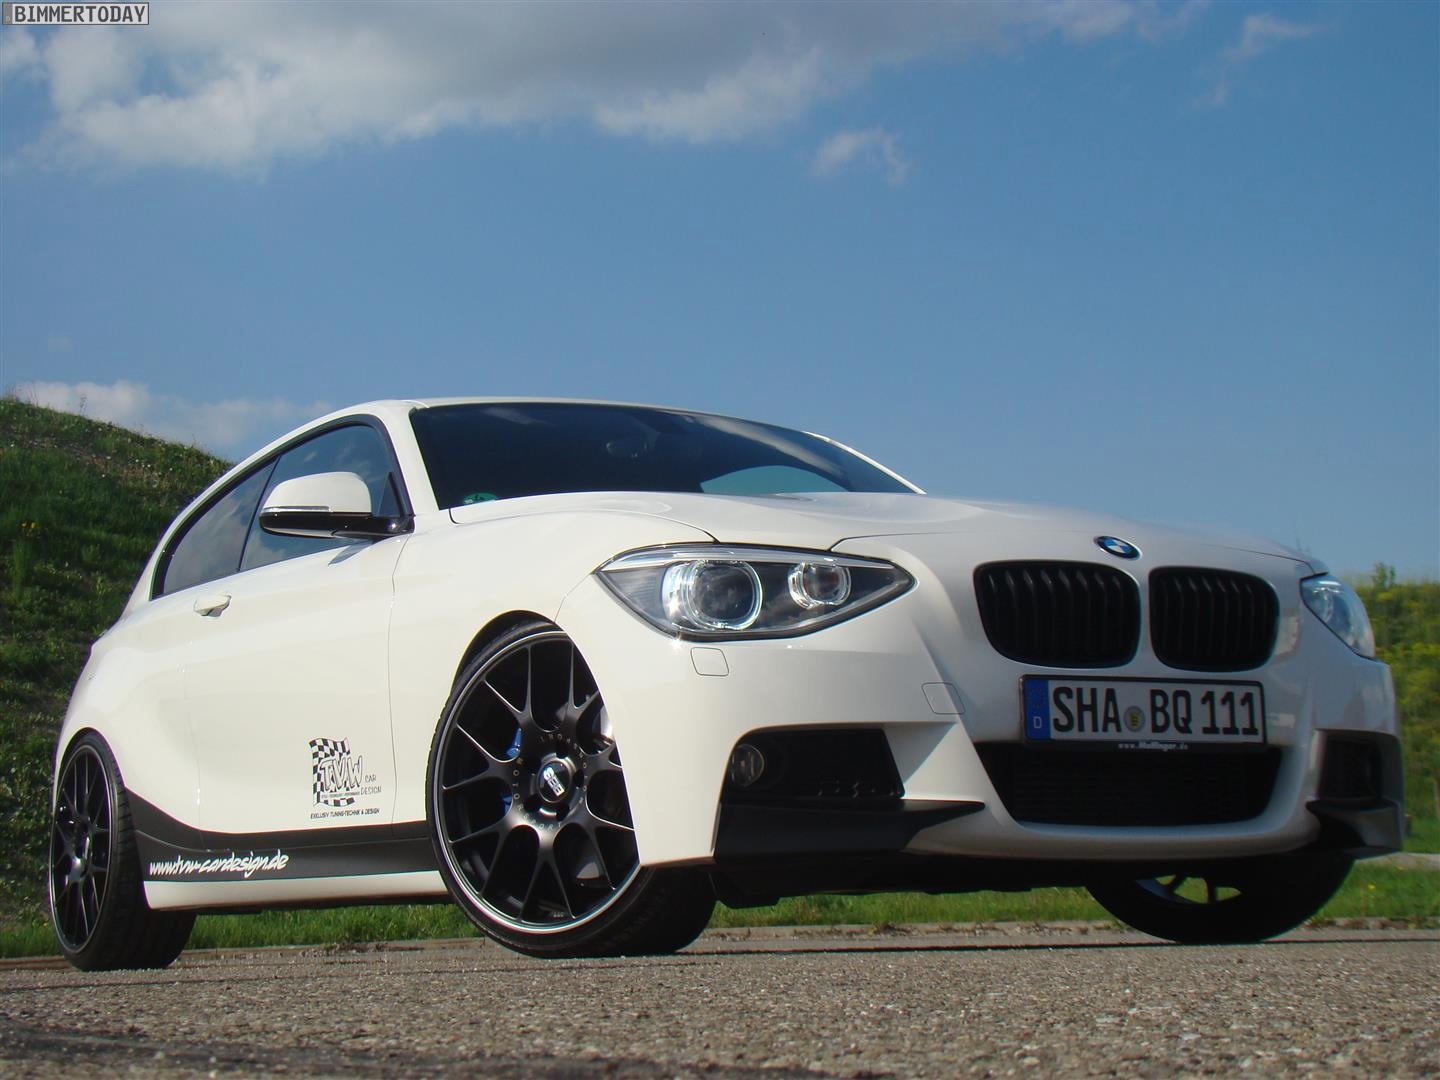 https://cdn.bimmertoday.de/wp-content/uploads/TVW-BMW-1er-F21-Tuning-118d-2013-15.jpg